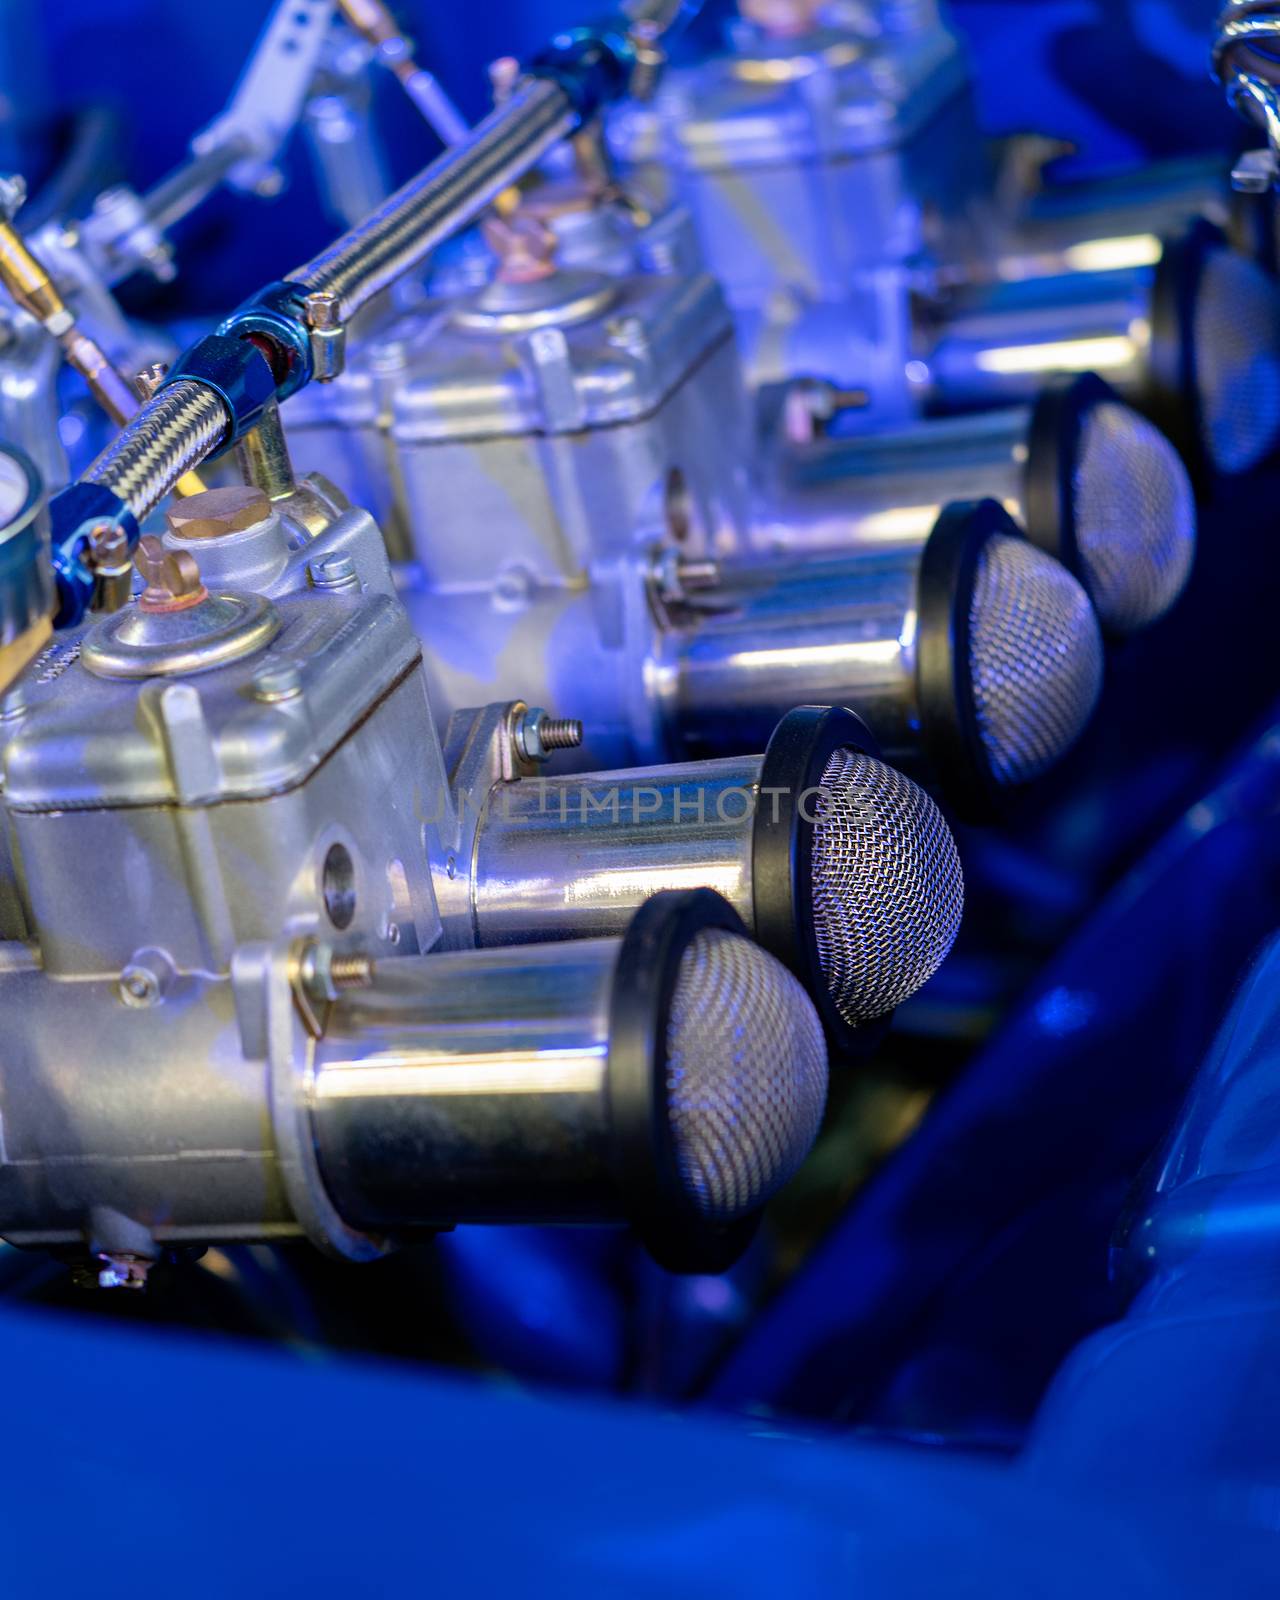 Close up of carburetor in engine of blue classic car